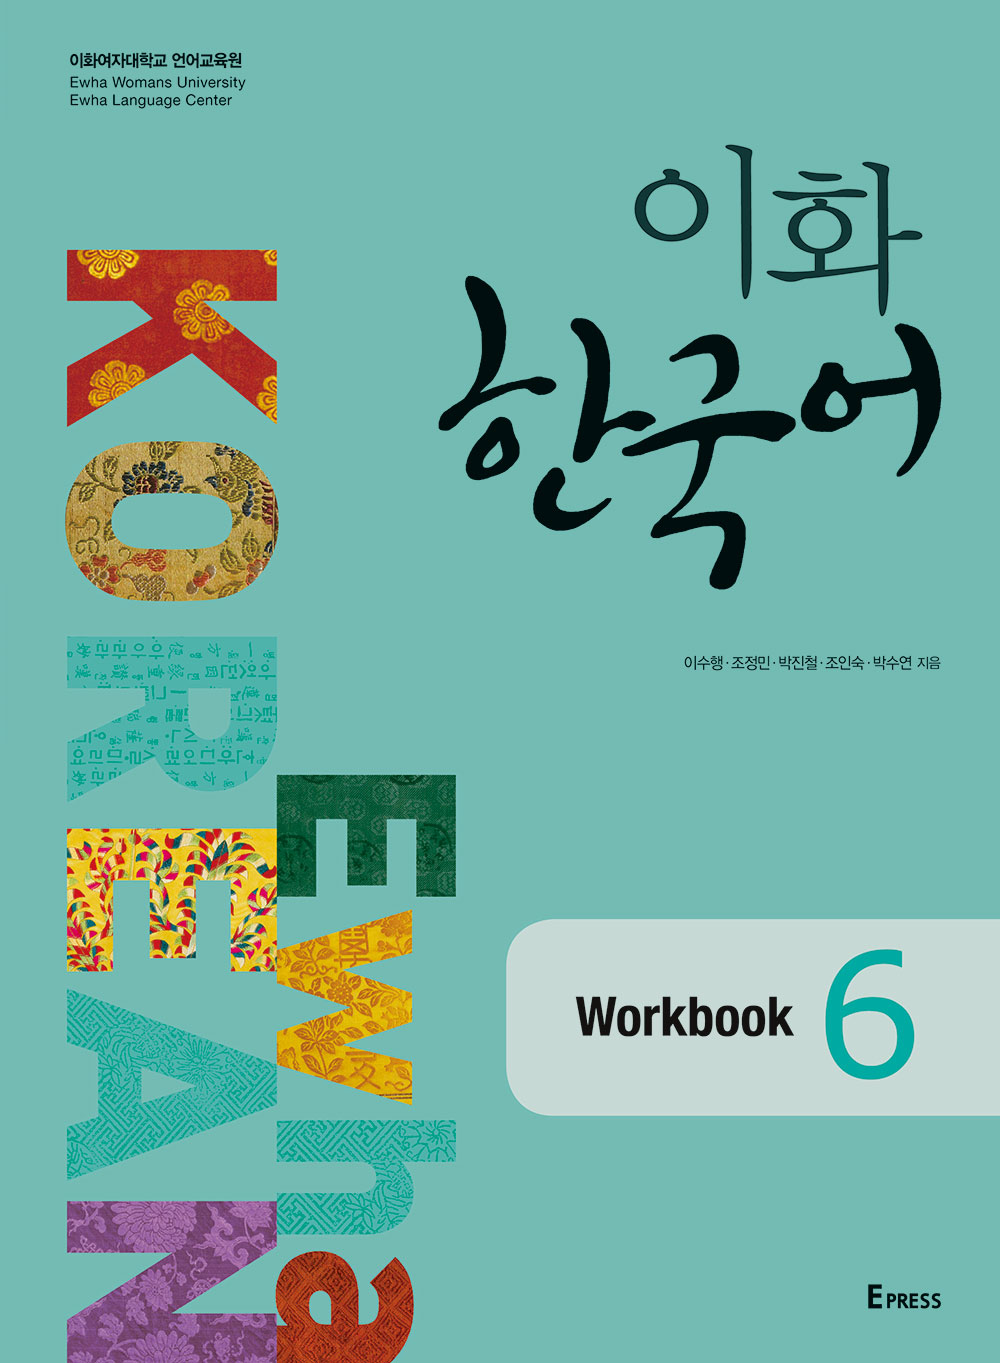 Ewha Korean Workbook 6 도서이미지